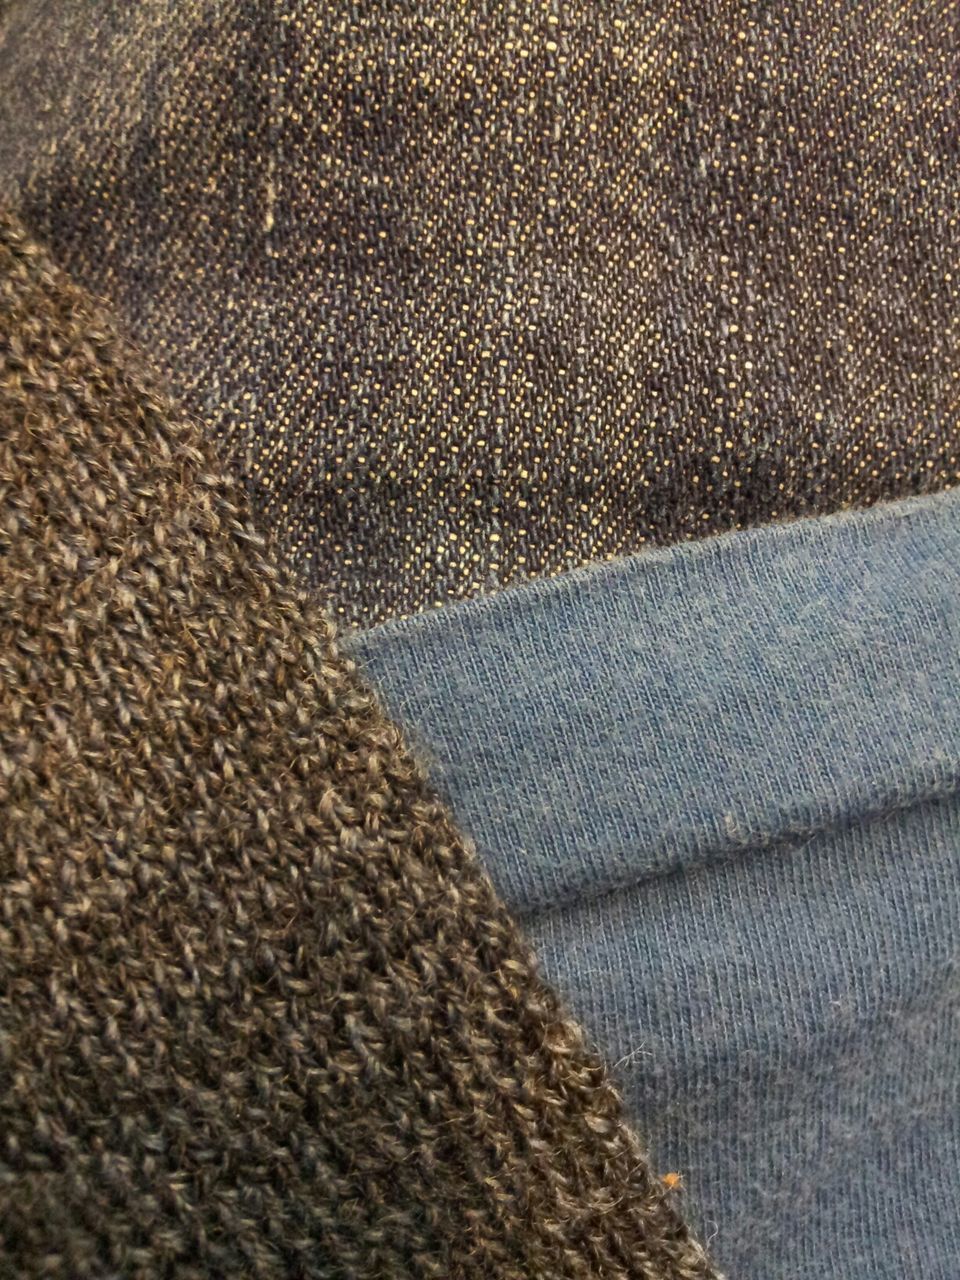 High angle view of fabric